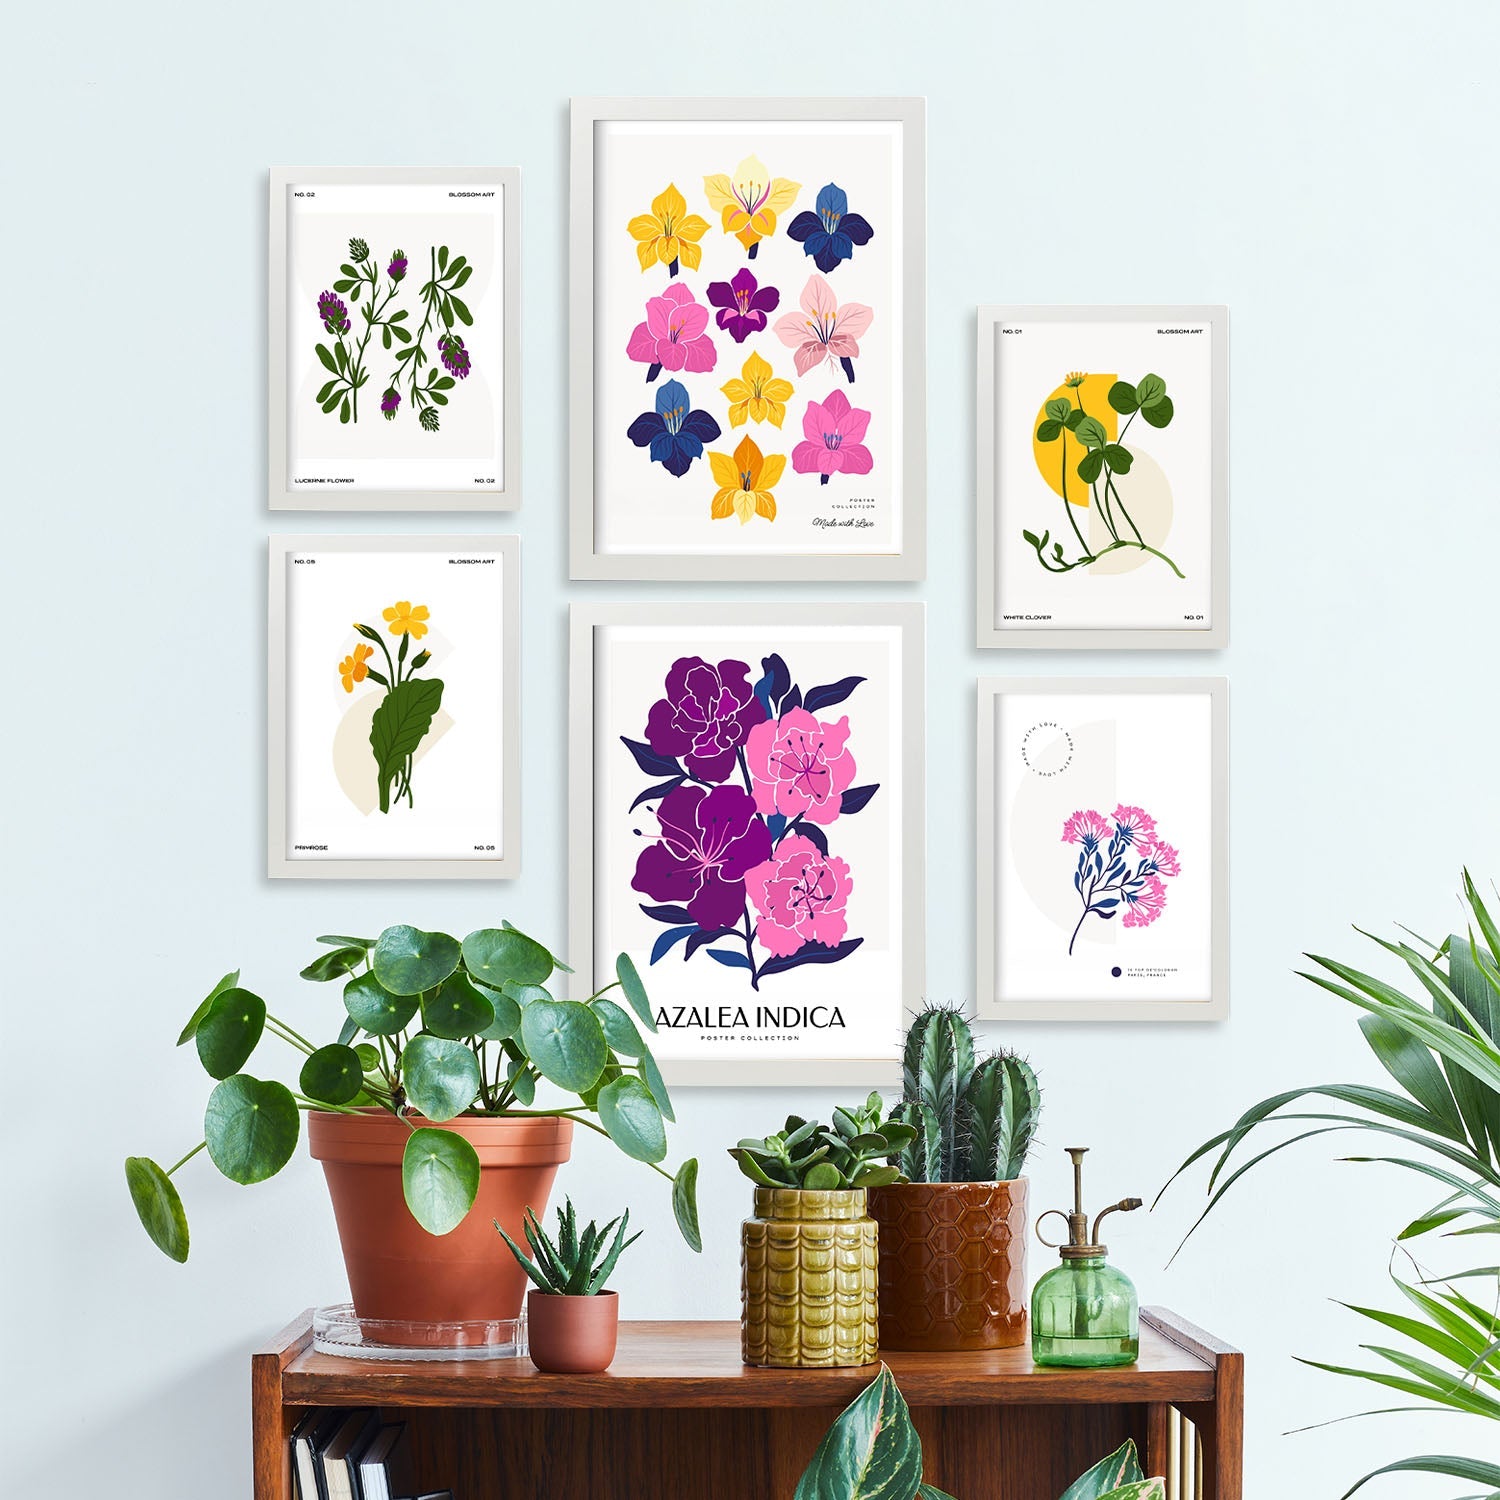 Flower Posters. Chromatic Scale. Nature and Botany-Artwork-Nacnic-Nacnic Estudio SL